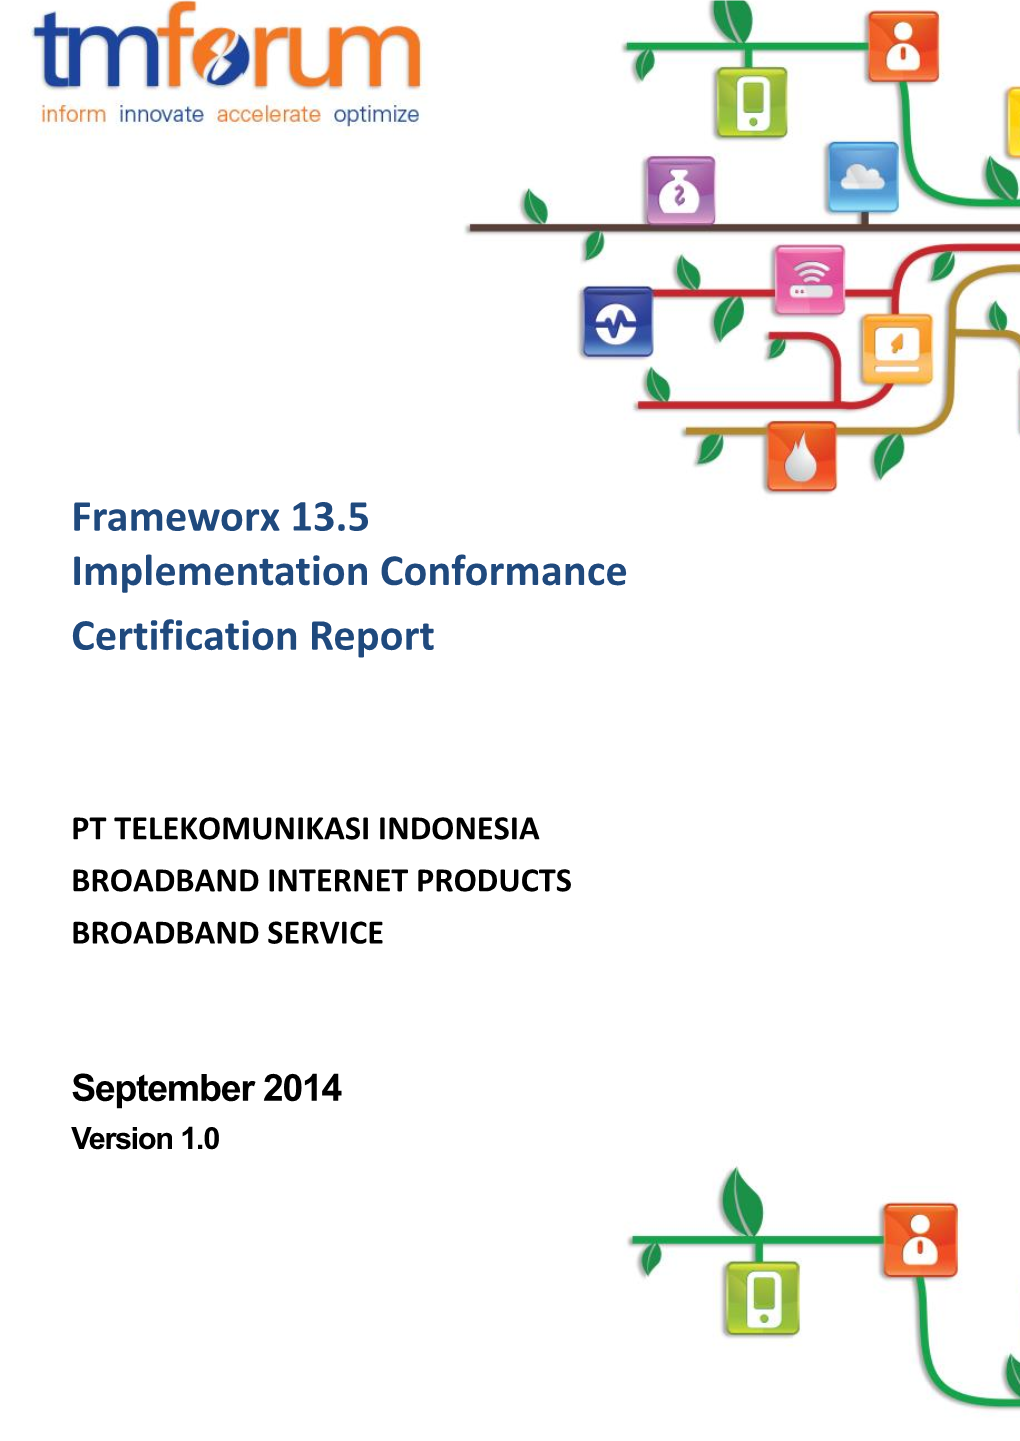 Telkom Indonesia Broadband Internet Products Frameworx 13.5